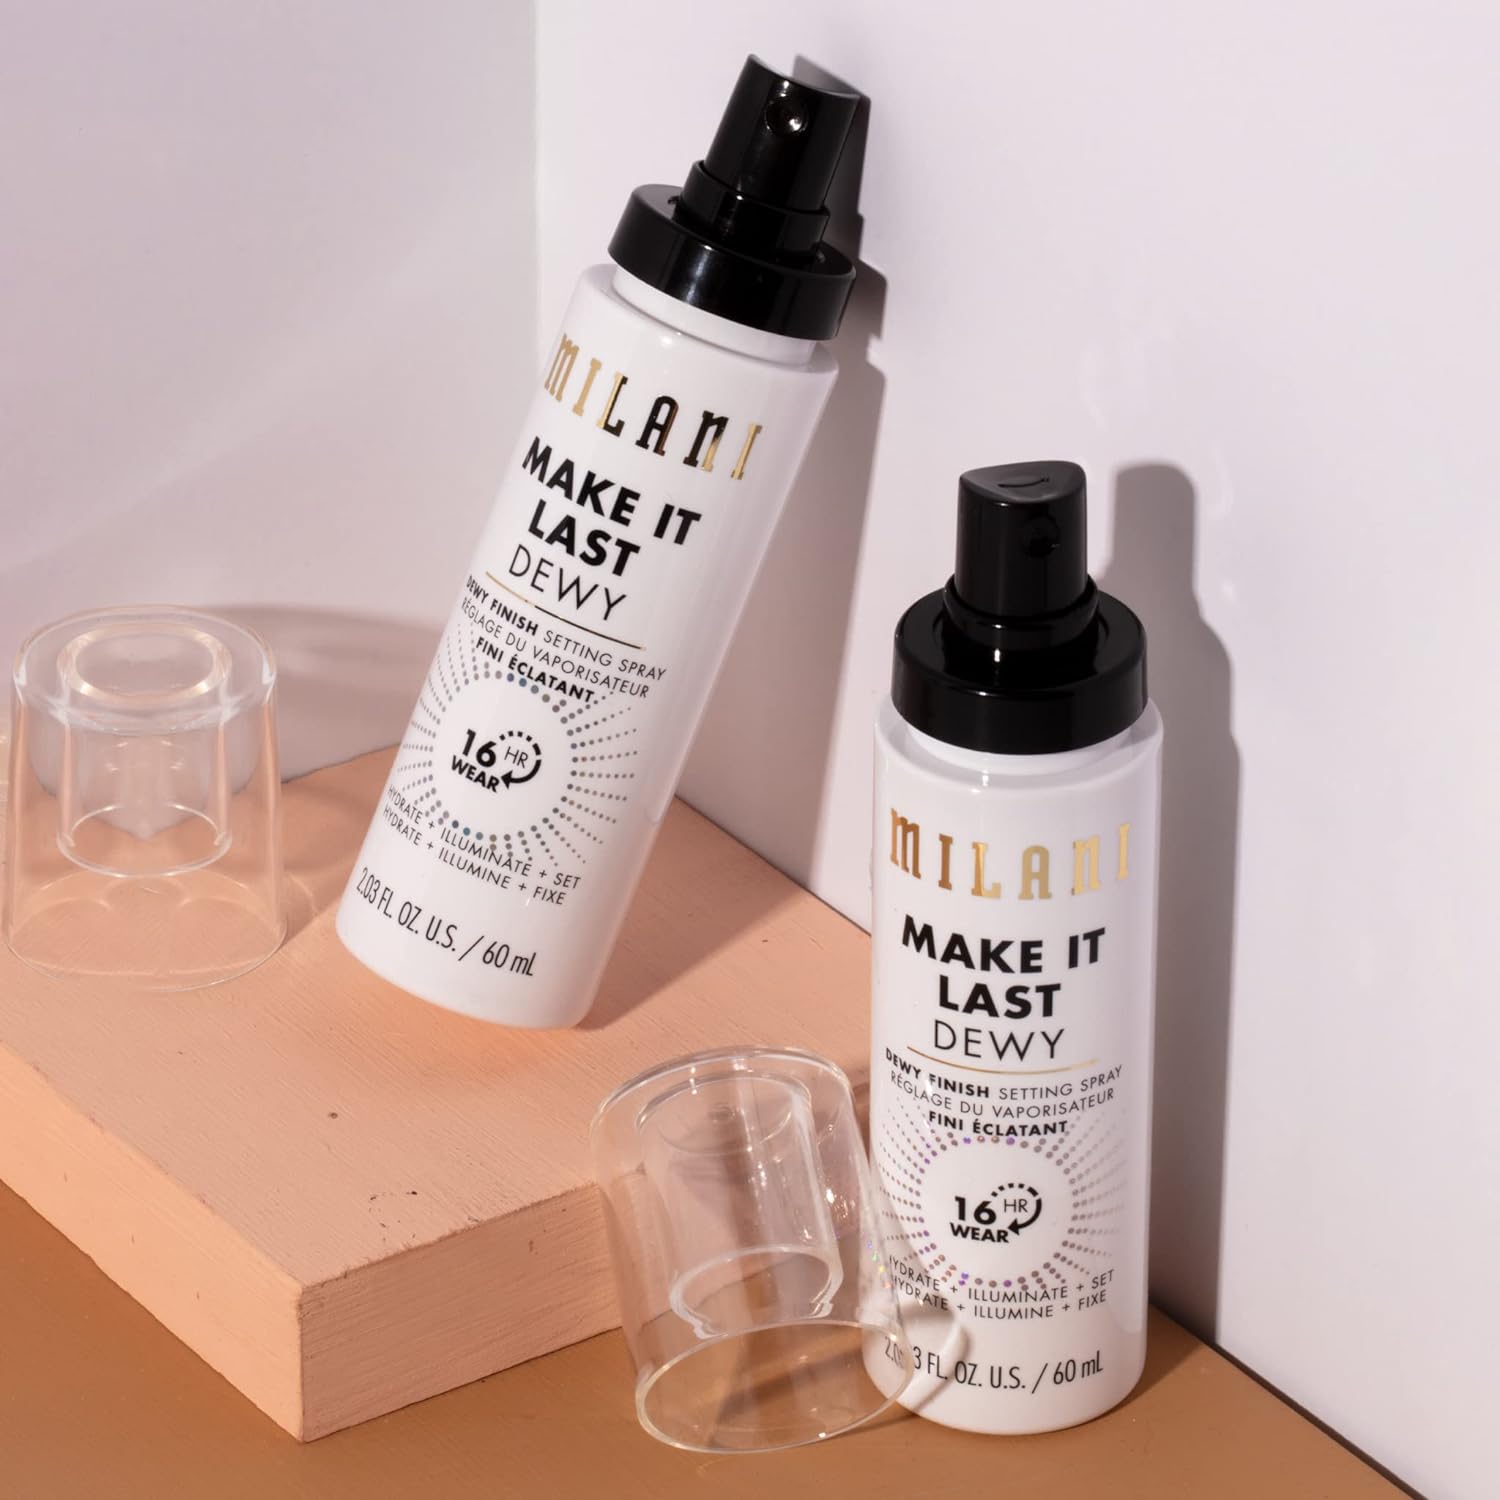 Milani Make It Dewy Setting Spray 3 in 1- Hydrate + Illuminate + Set (2.03 Fl. Oz.) Makeup Finishing Spray - Makeup Primer & Hydrating Setting Spray